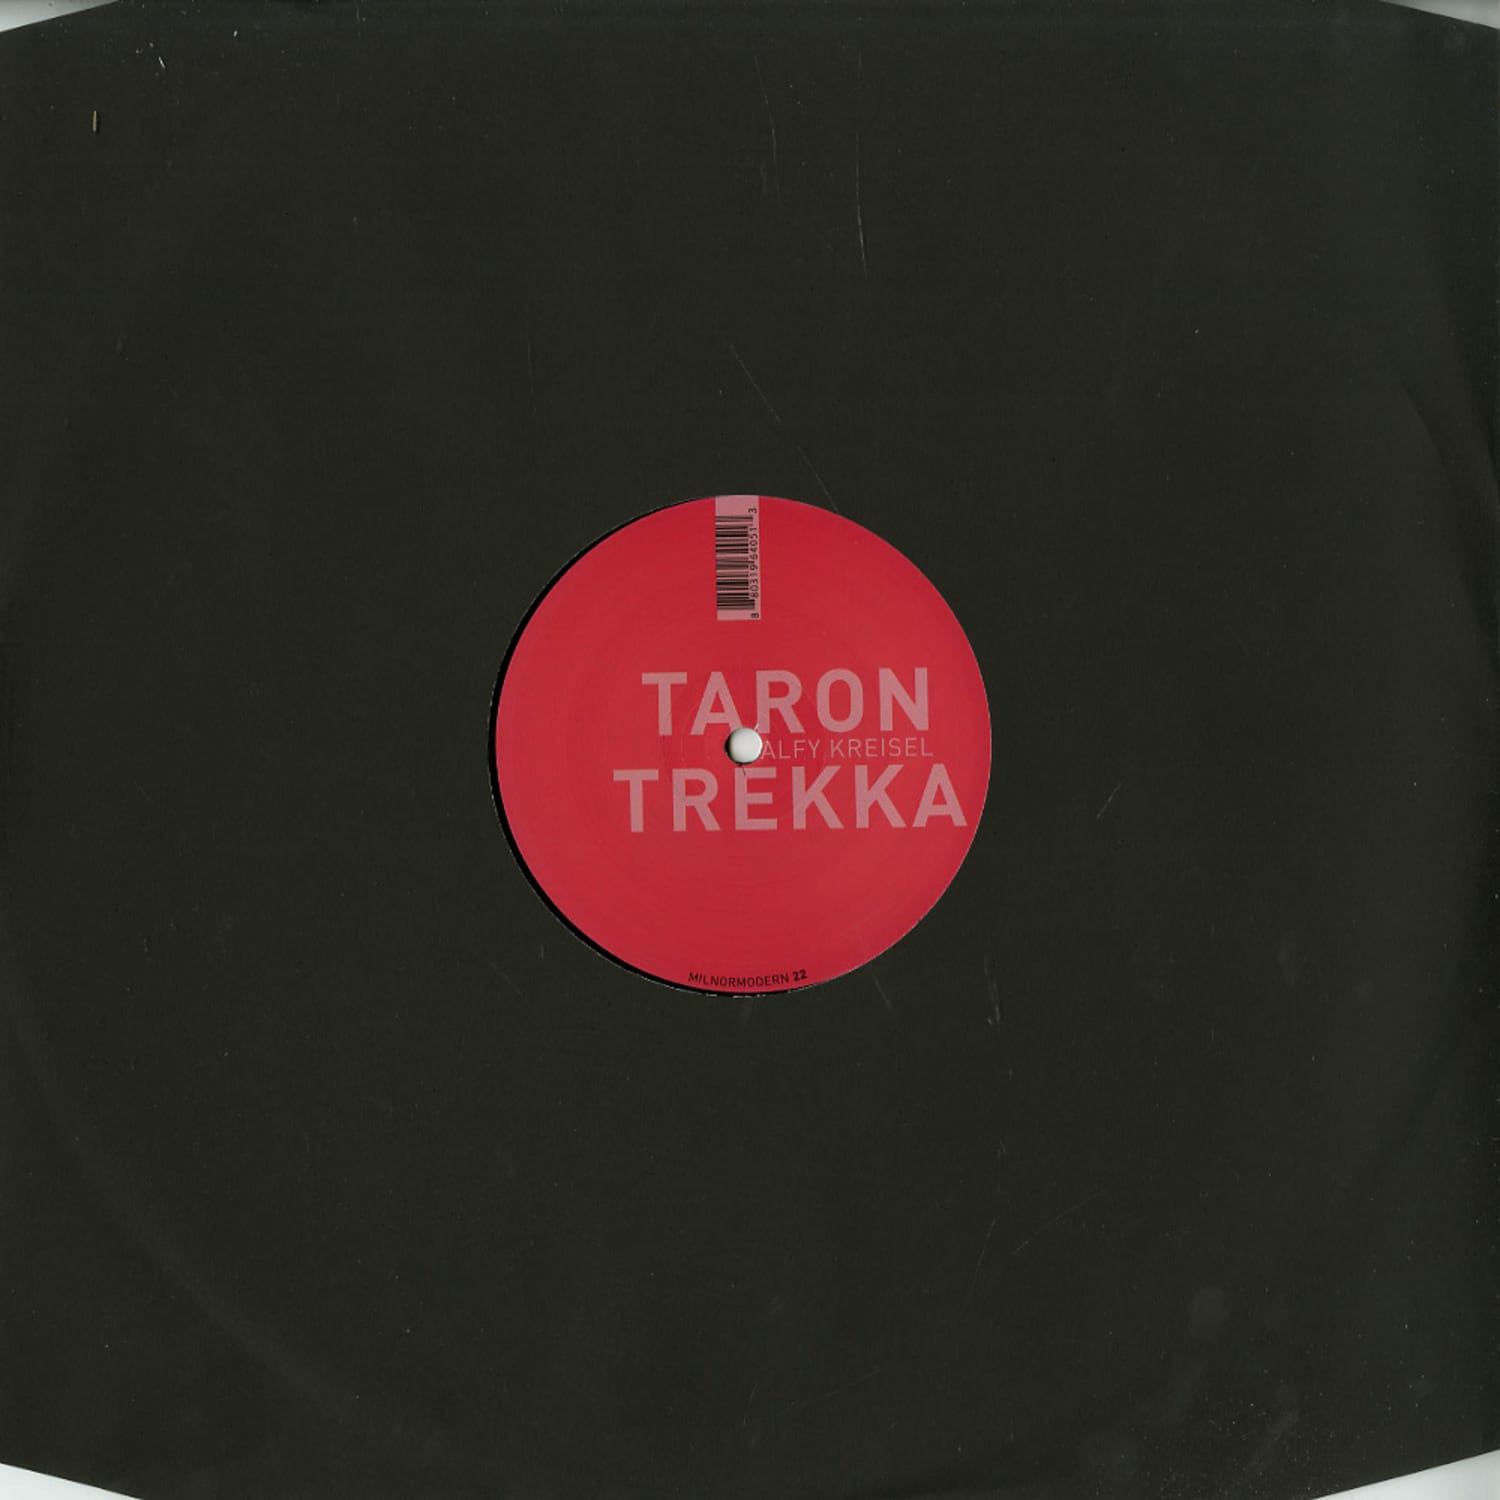 Taron-Trekka - ALFY KREISEL EP